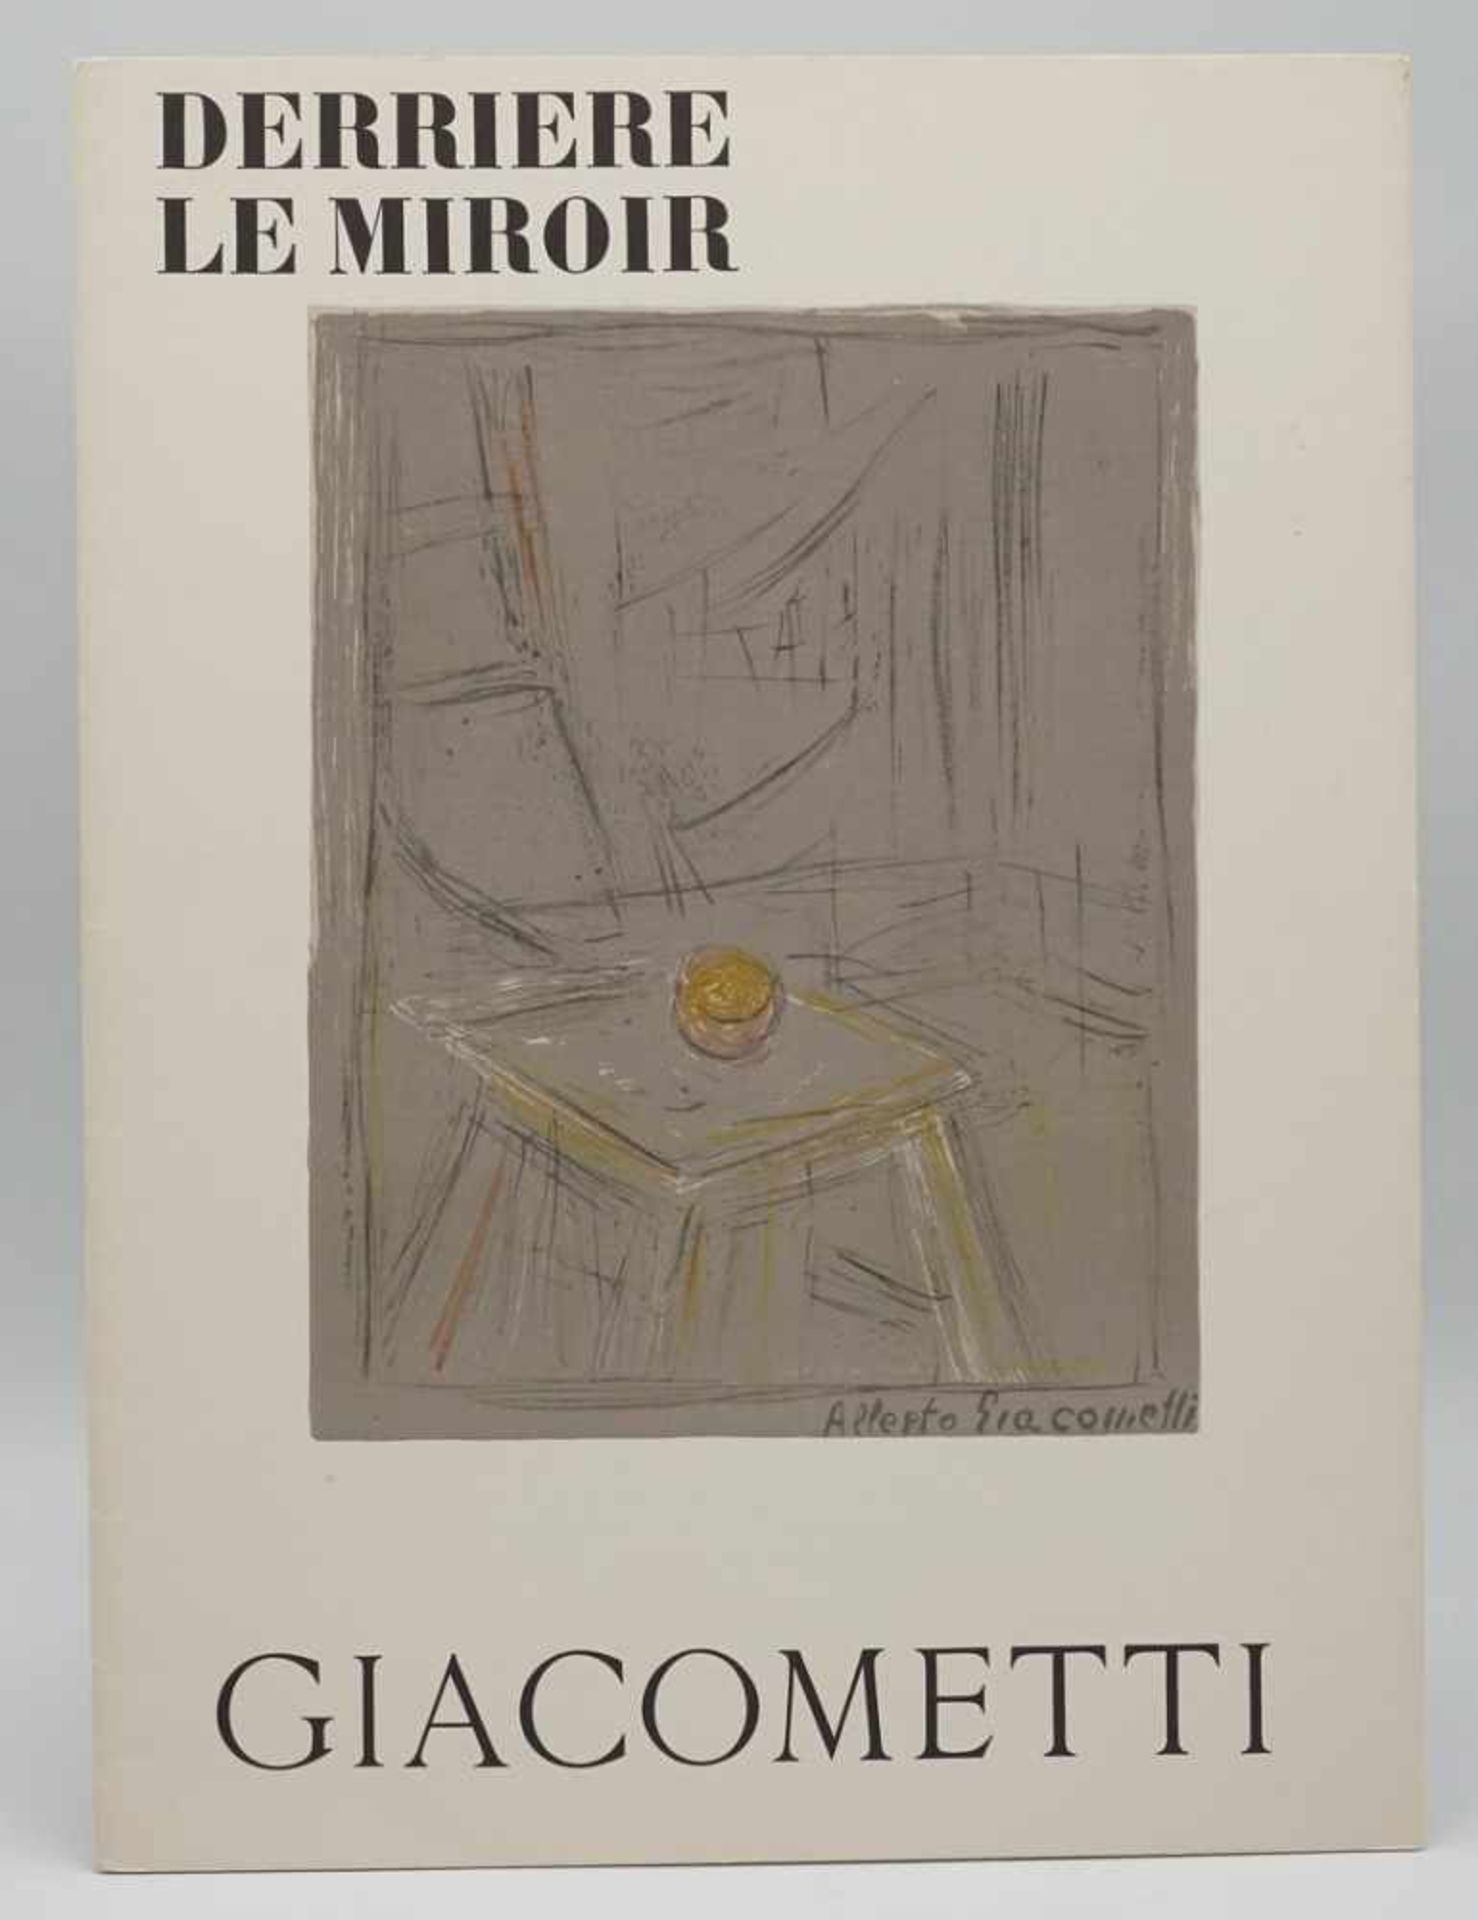 "Derrière le miroir" Giacometti